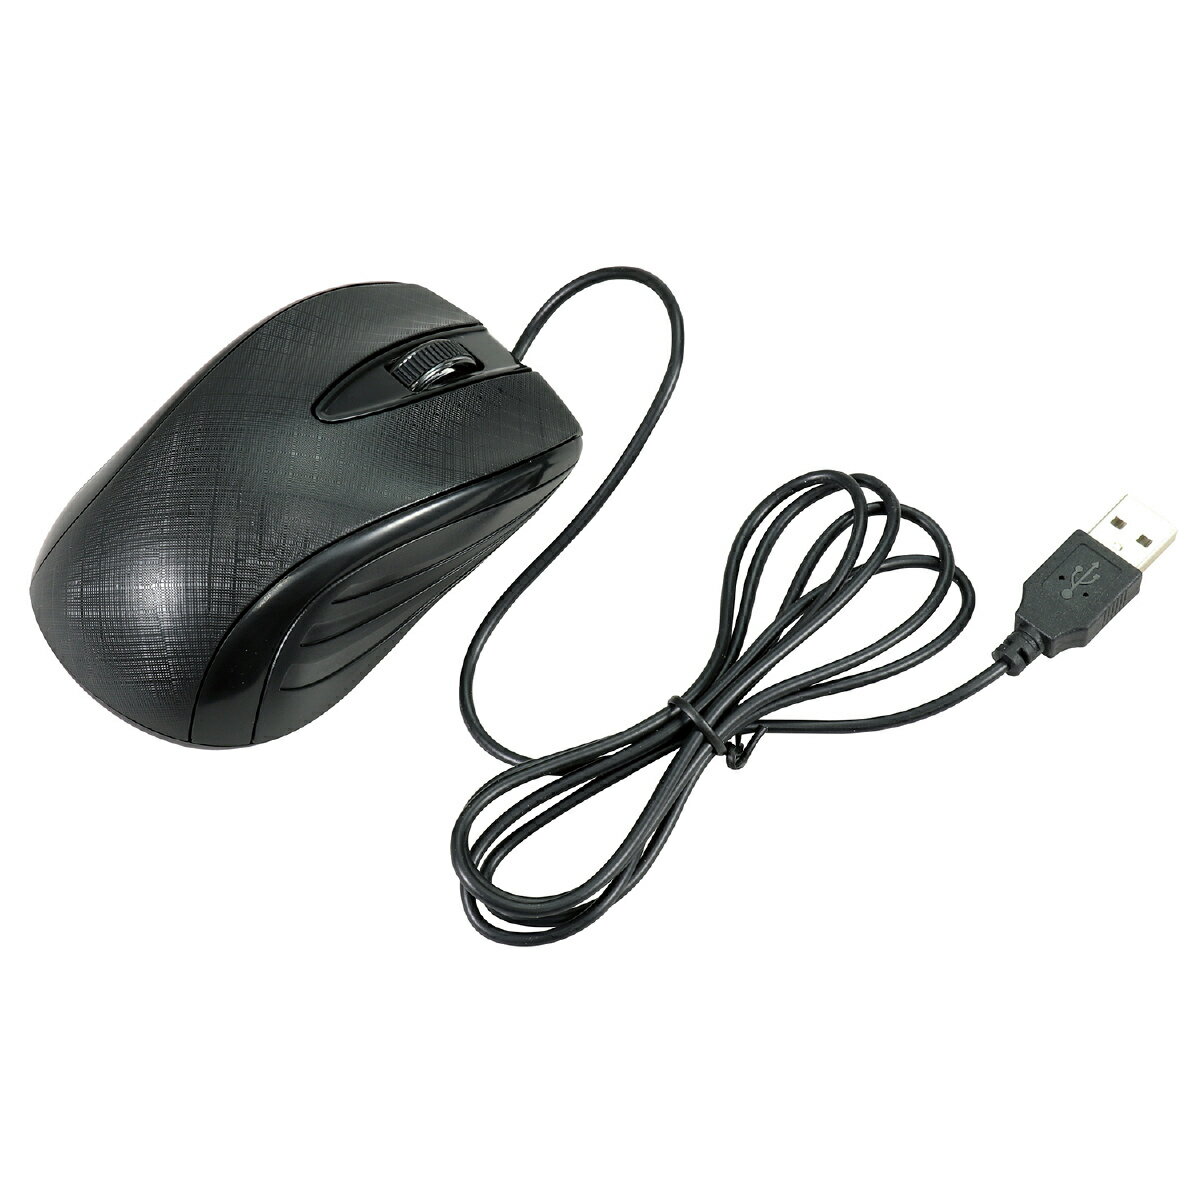 USBボタンマウス マウス 有線 パソコン周辺機器 pc 事務用品 OA機器 オフィス